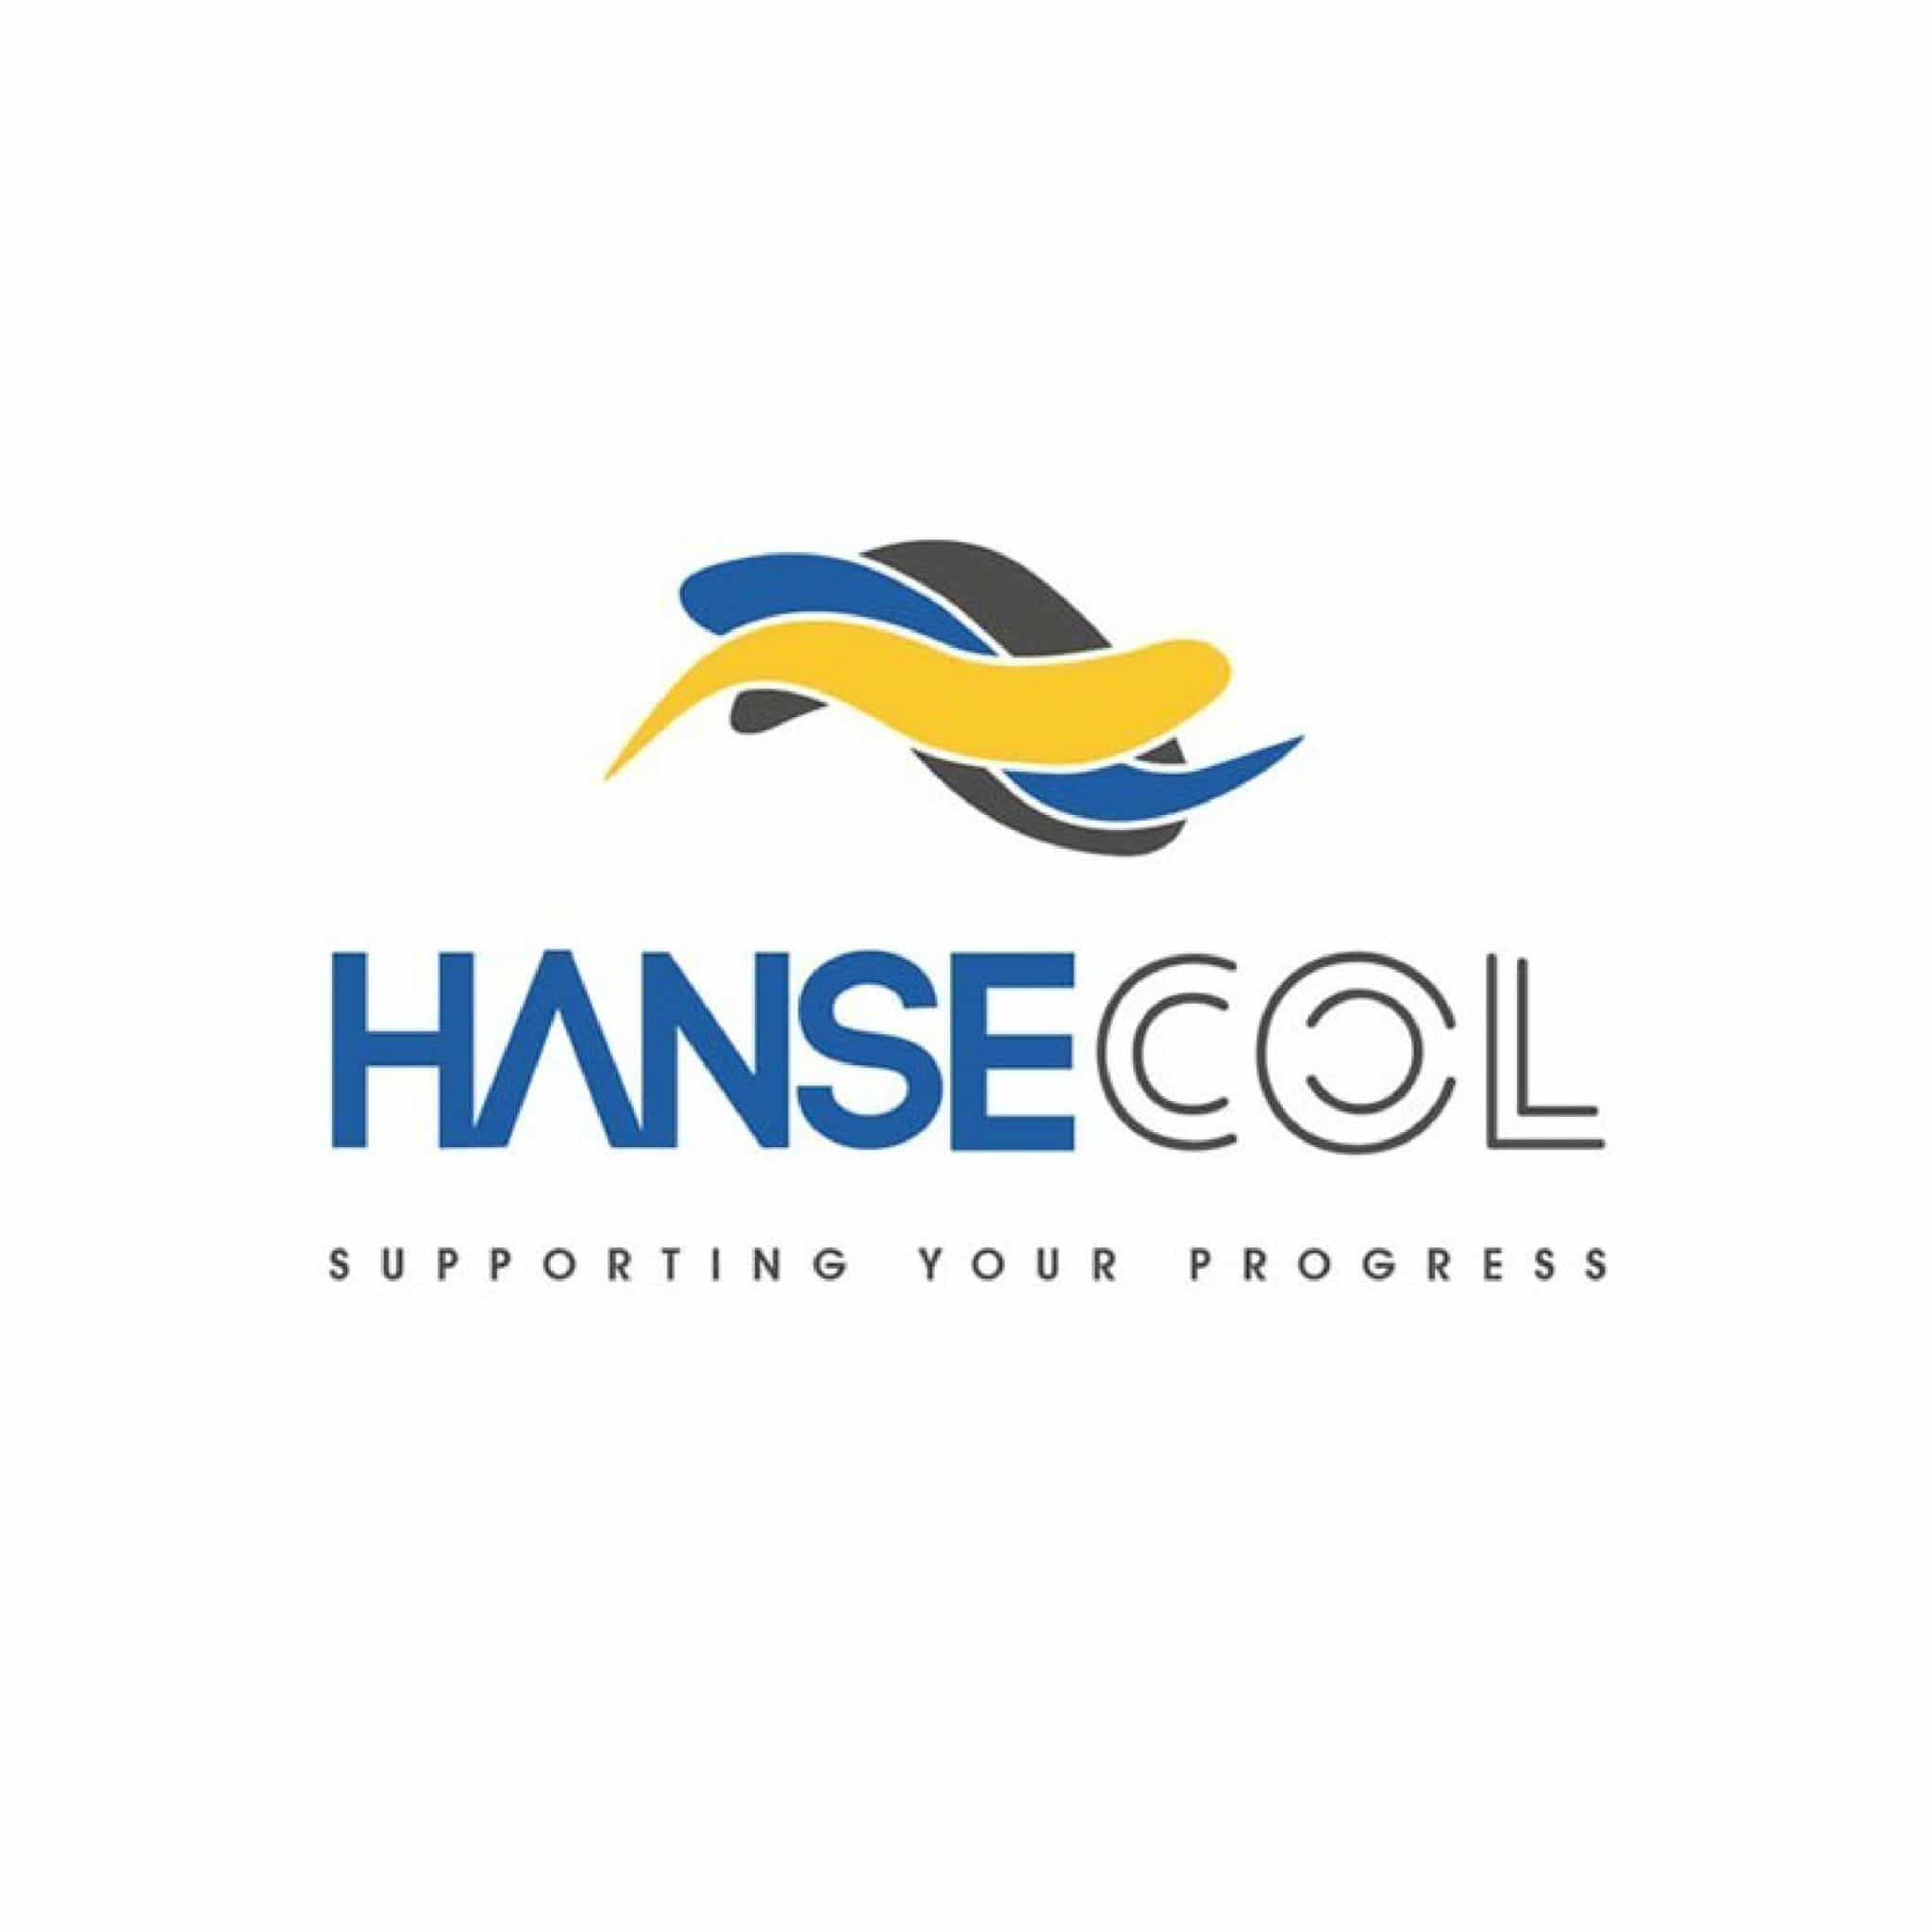 (c) Hansecol.com.co